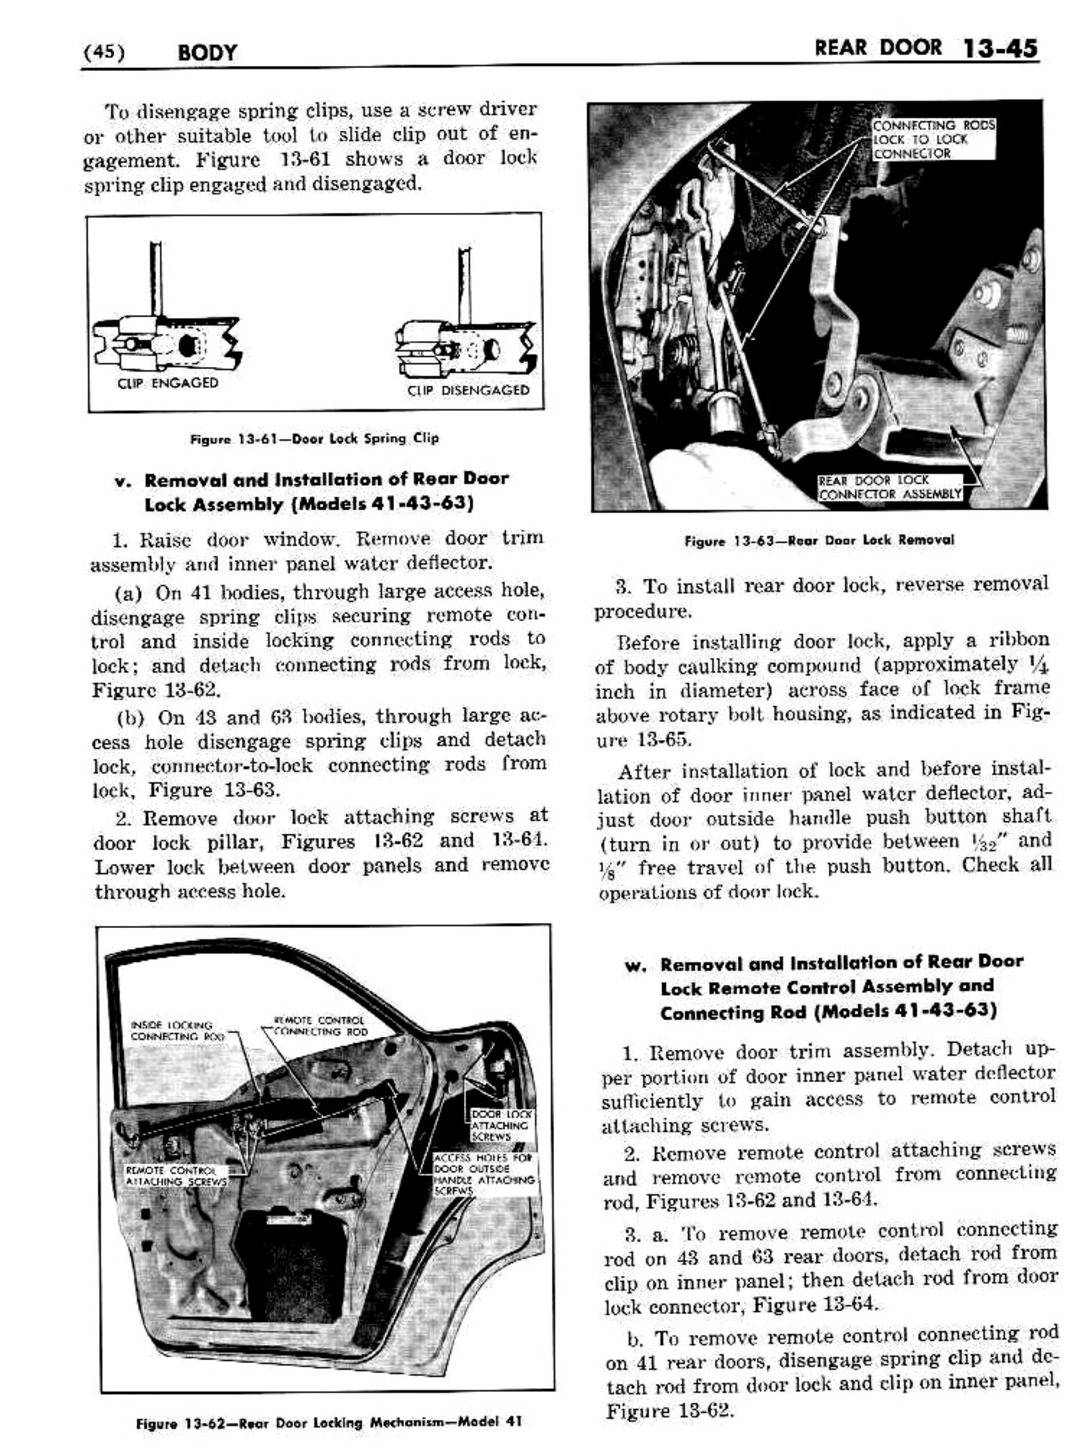 n_1958 Buick Body Service Manual-046-046.jpg